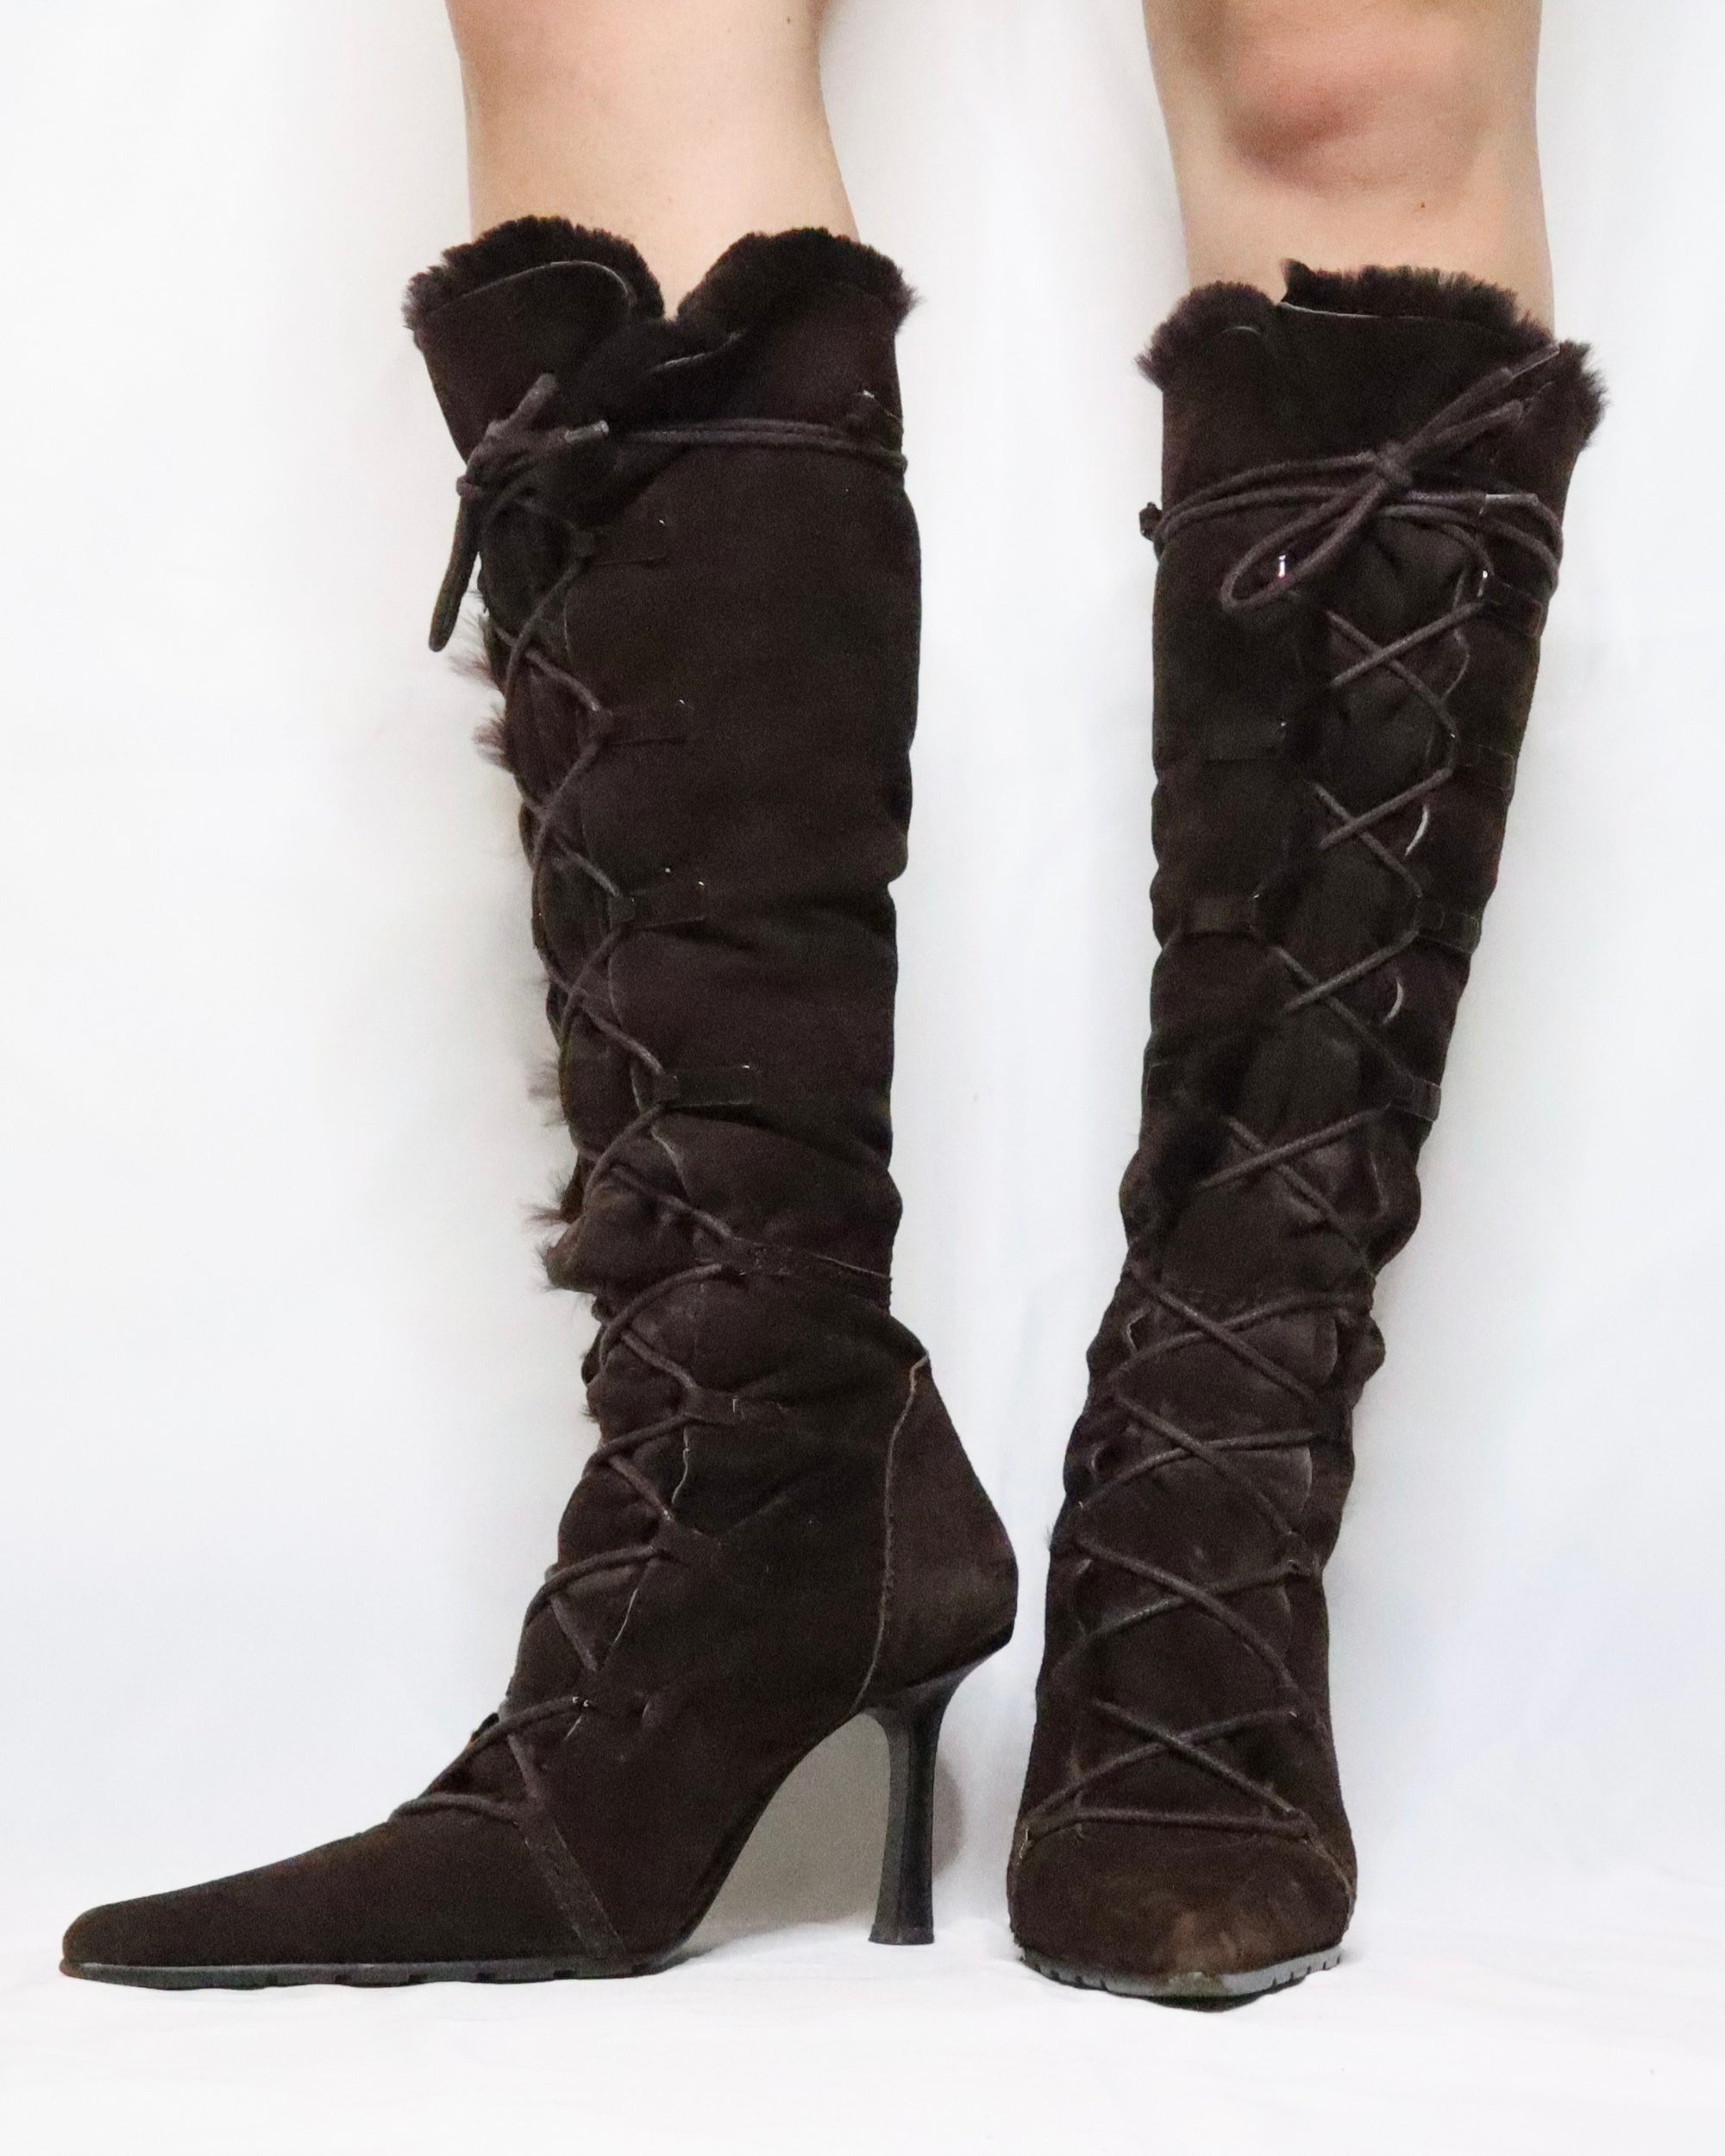 Knee High Stiletto Boots (6.5-7 US) 